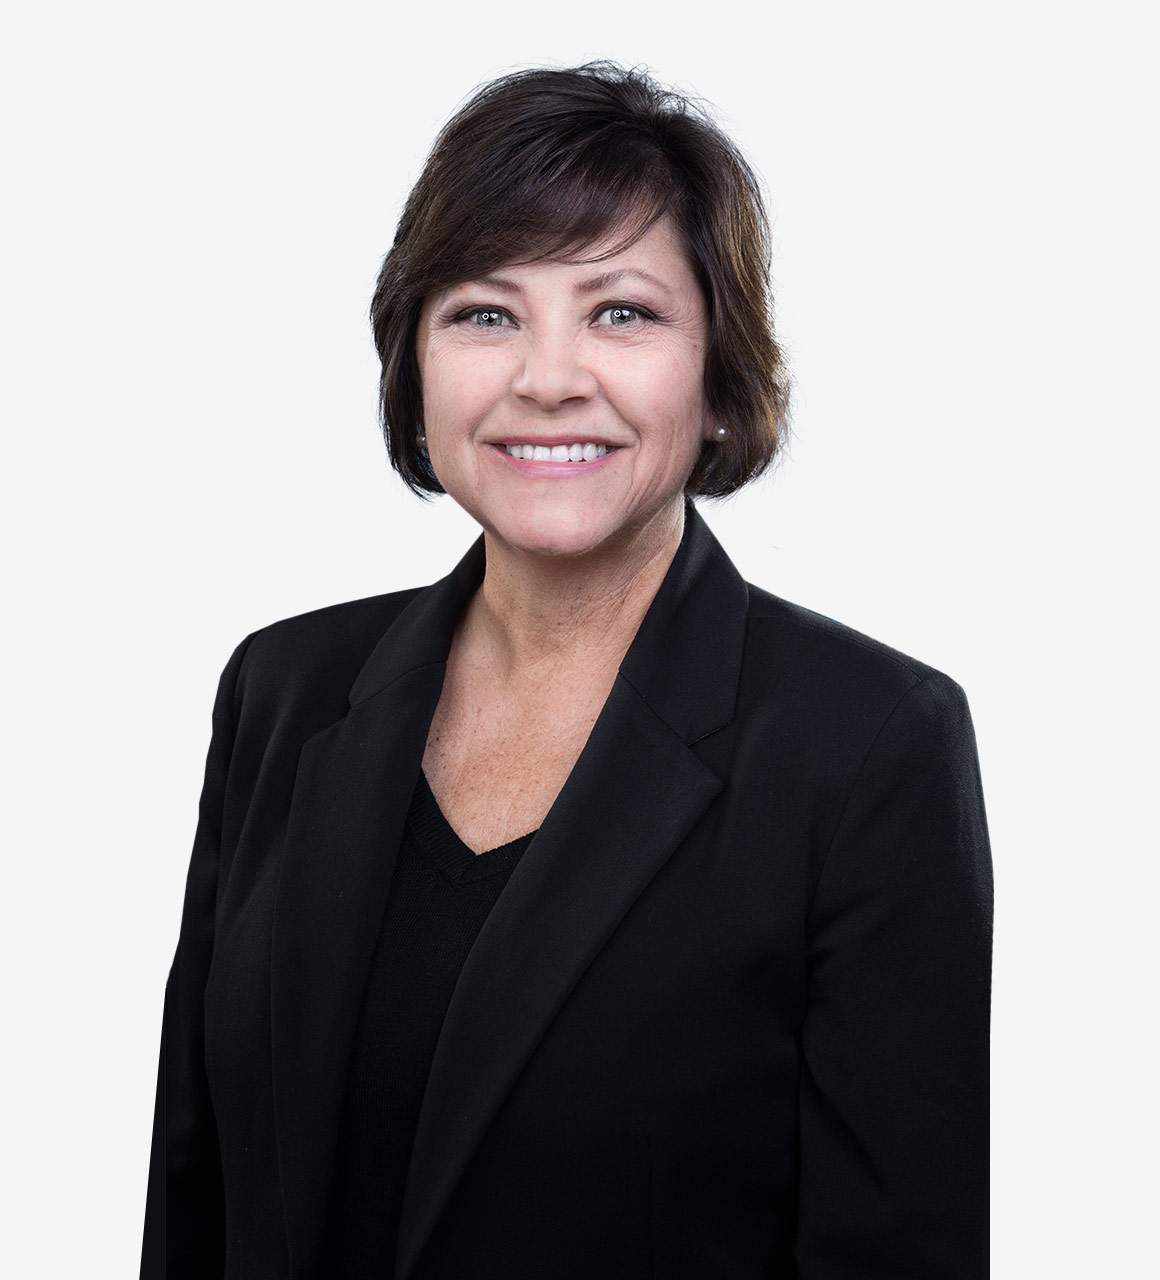 Kimberly Harrell, Senior Director of Administration - LA at Arent Fox